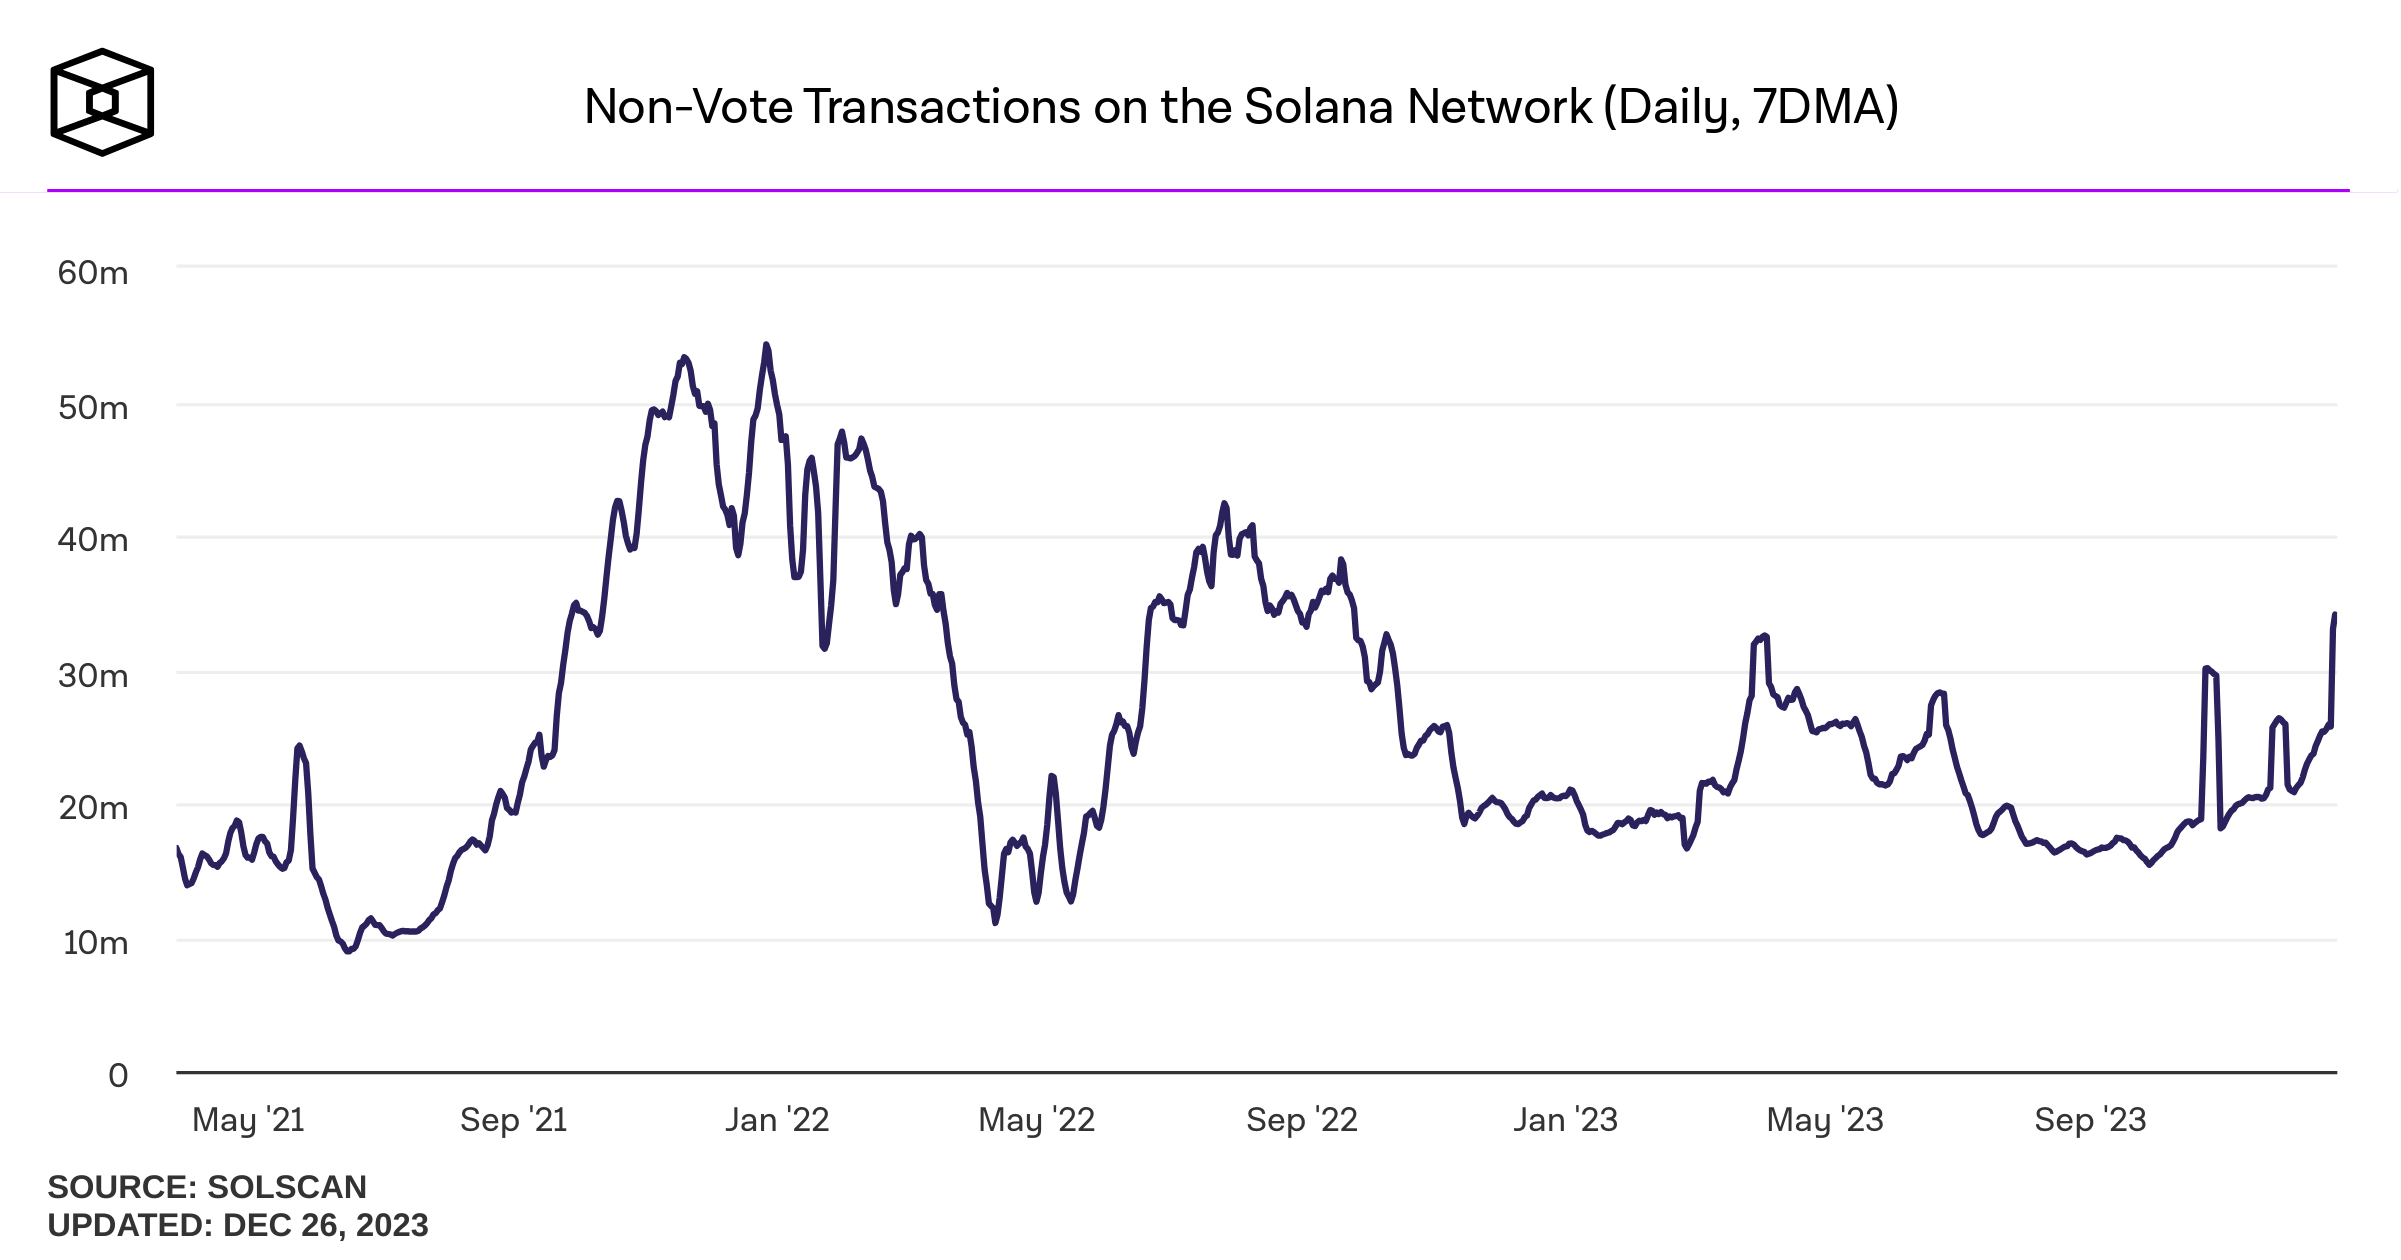 Non-vote transactions o the Solana network